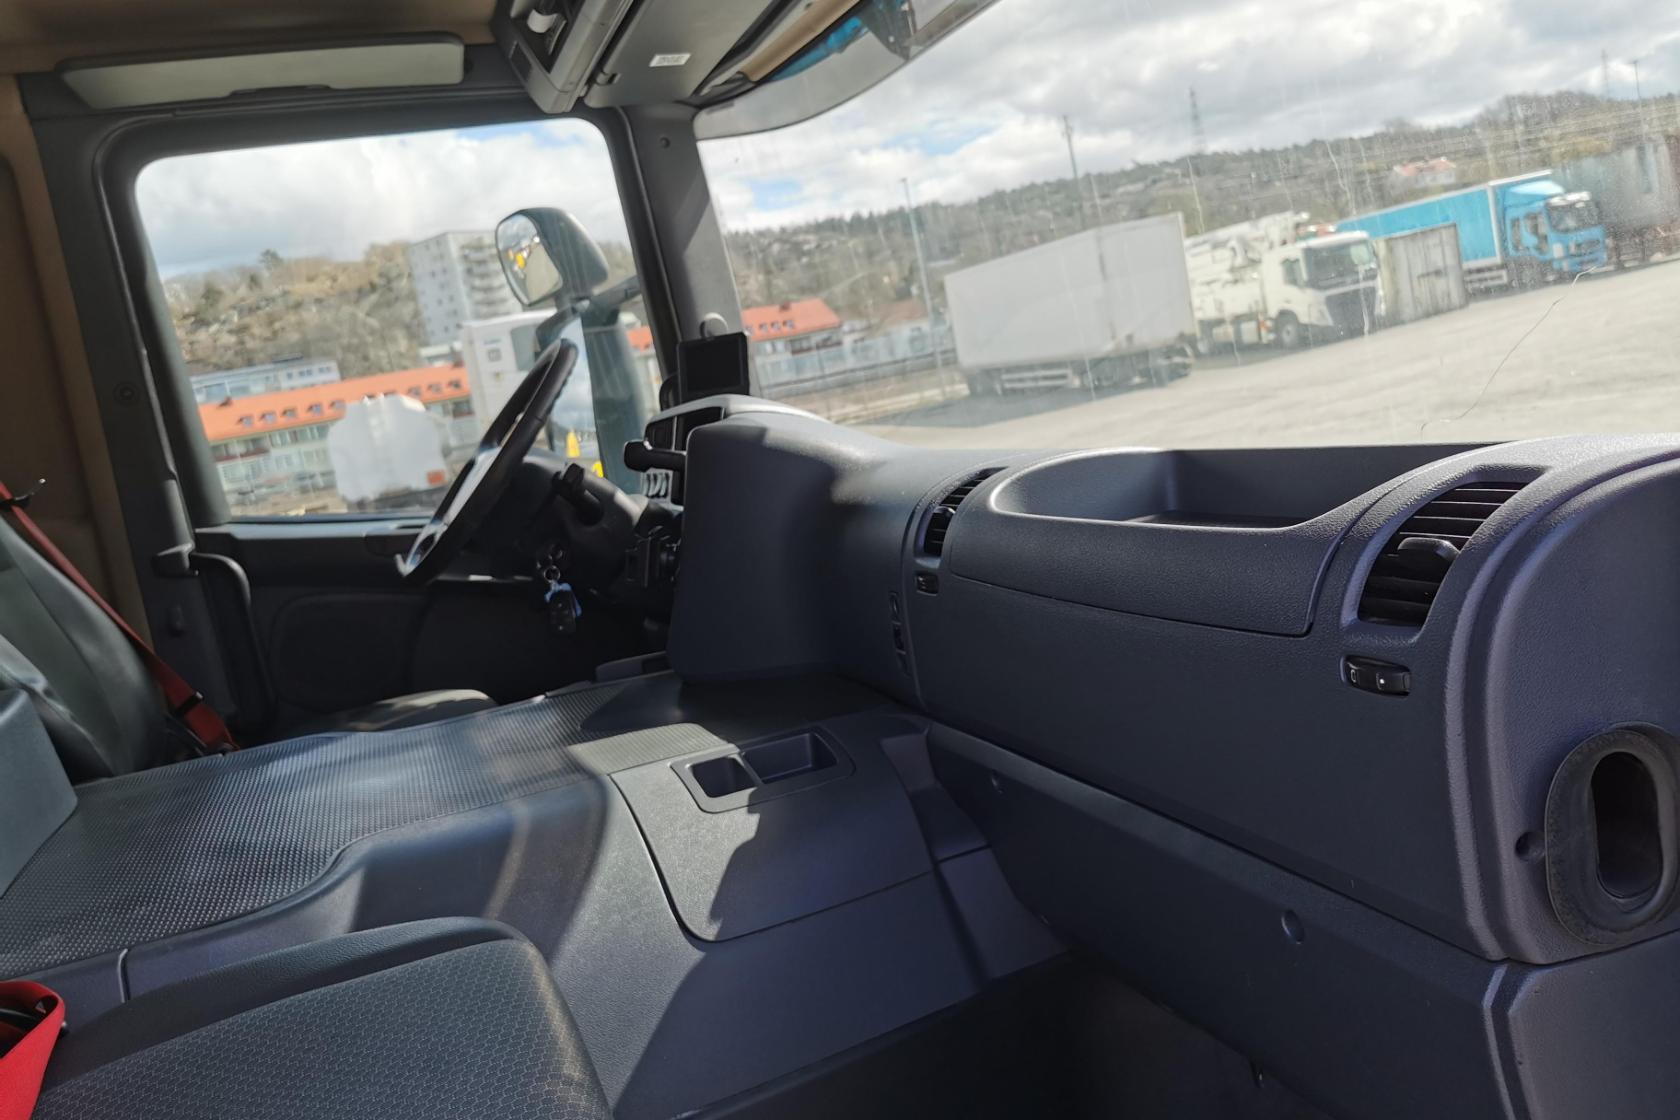 Scania P230 - 512 615 km - Automat - blå - 2013